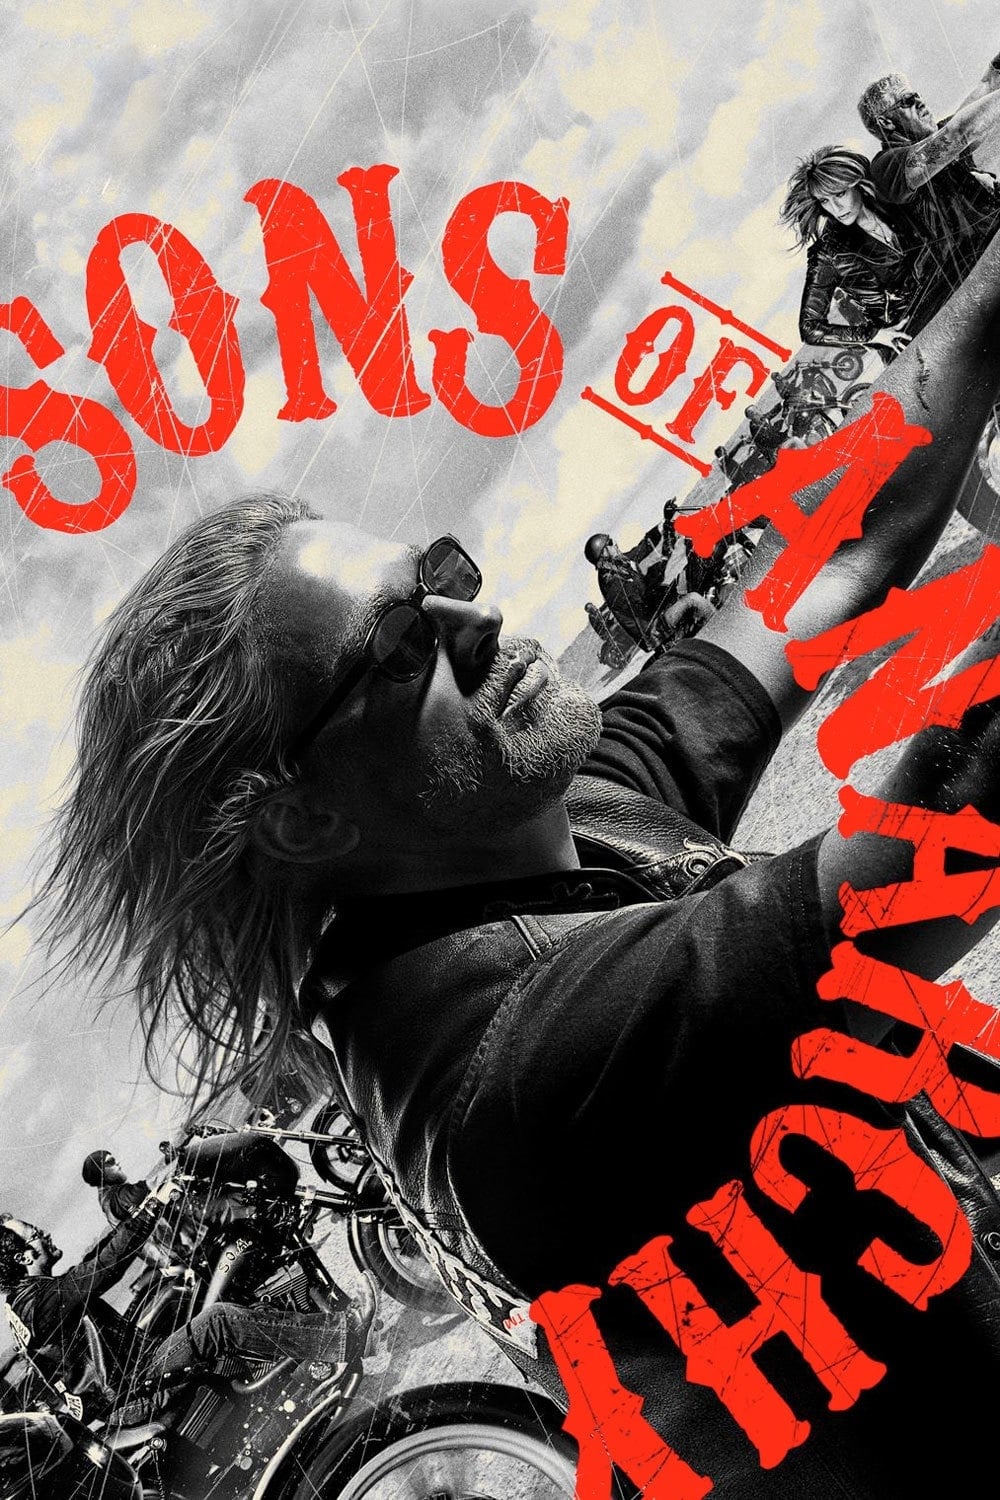 Sons of Anarchy (2008 - 2014) Seizoen 3 Disc 1 BD50